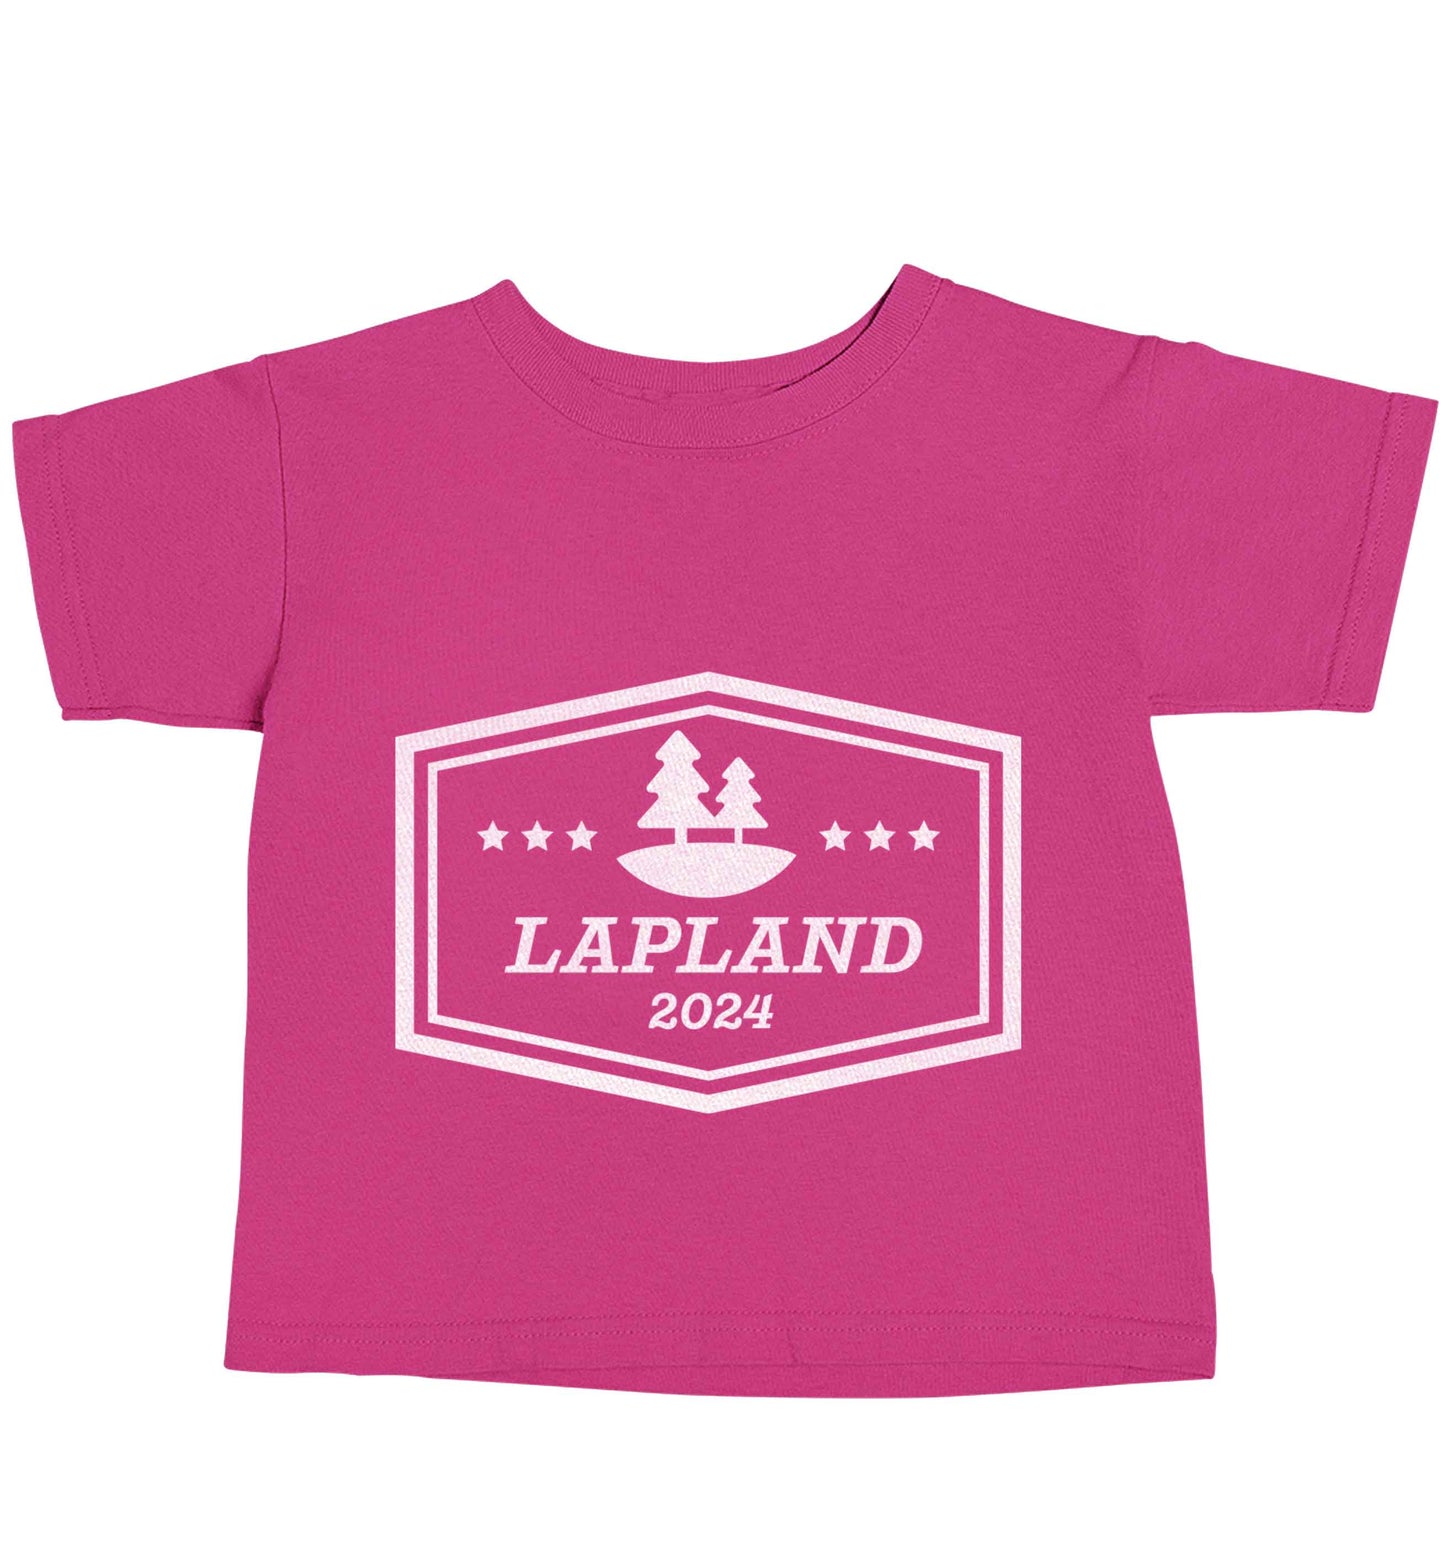 Custom date Lapland pink baby toddler Tshirt 2 Years